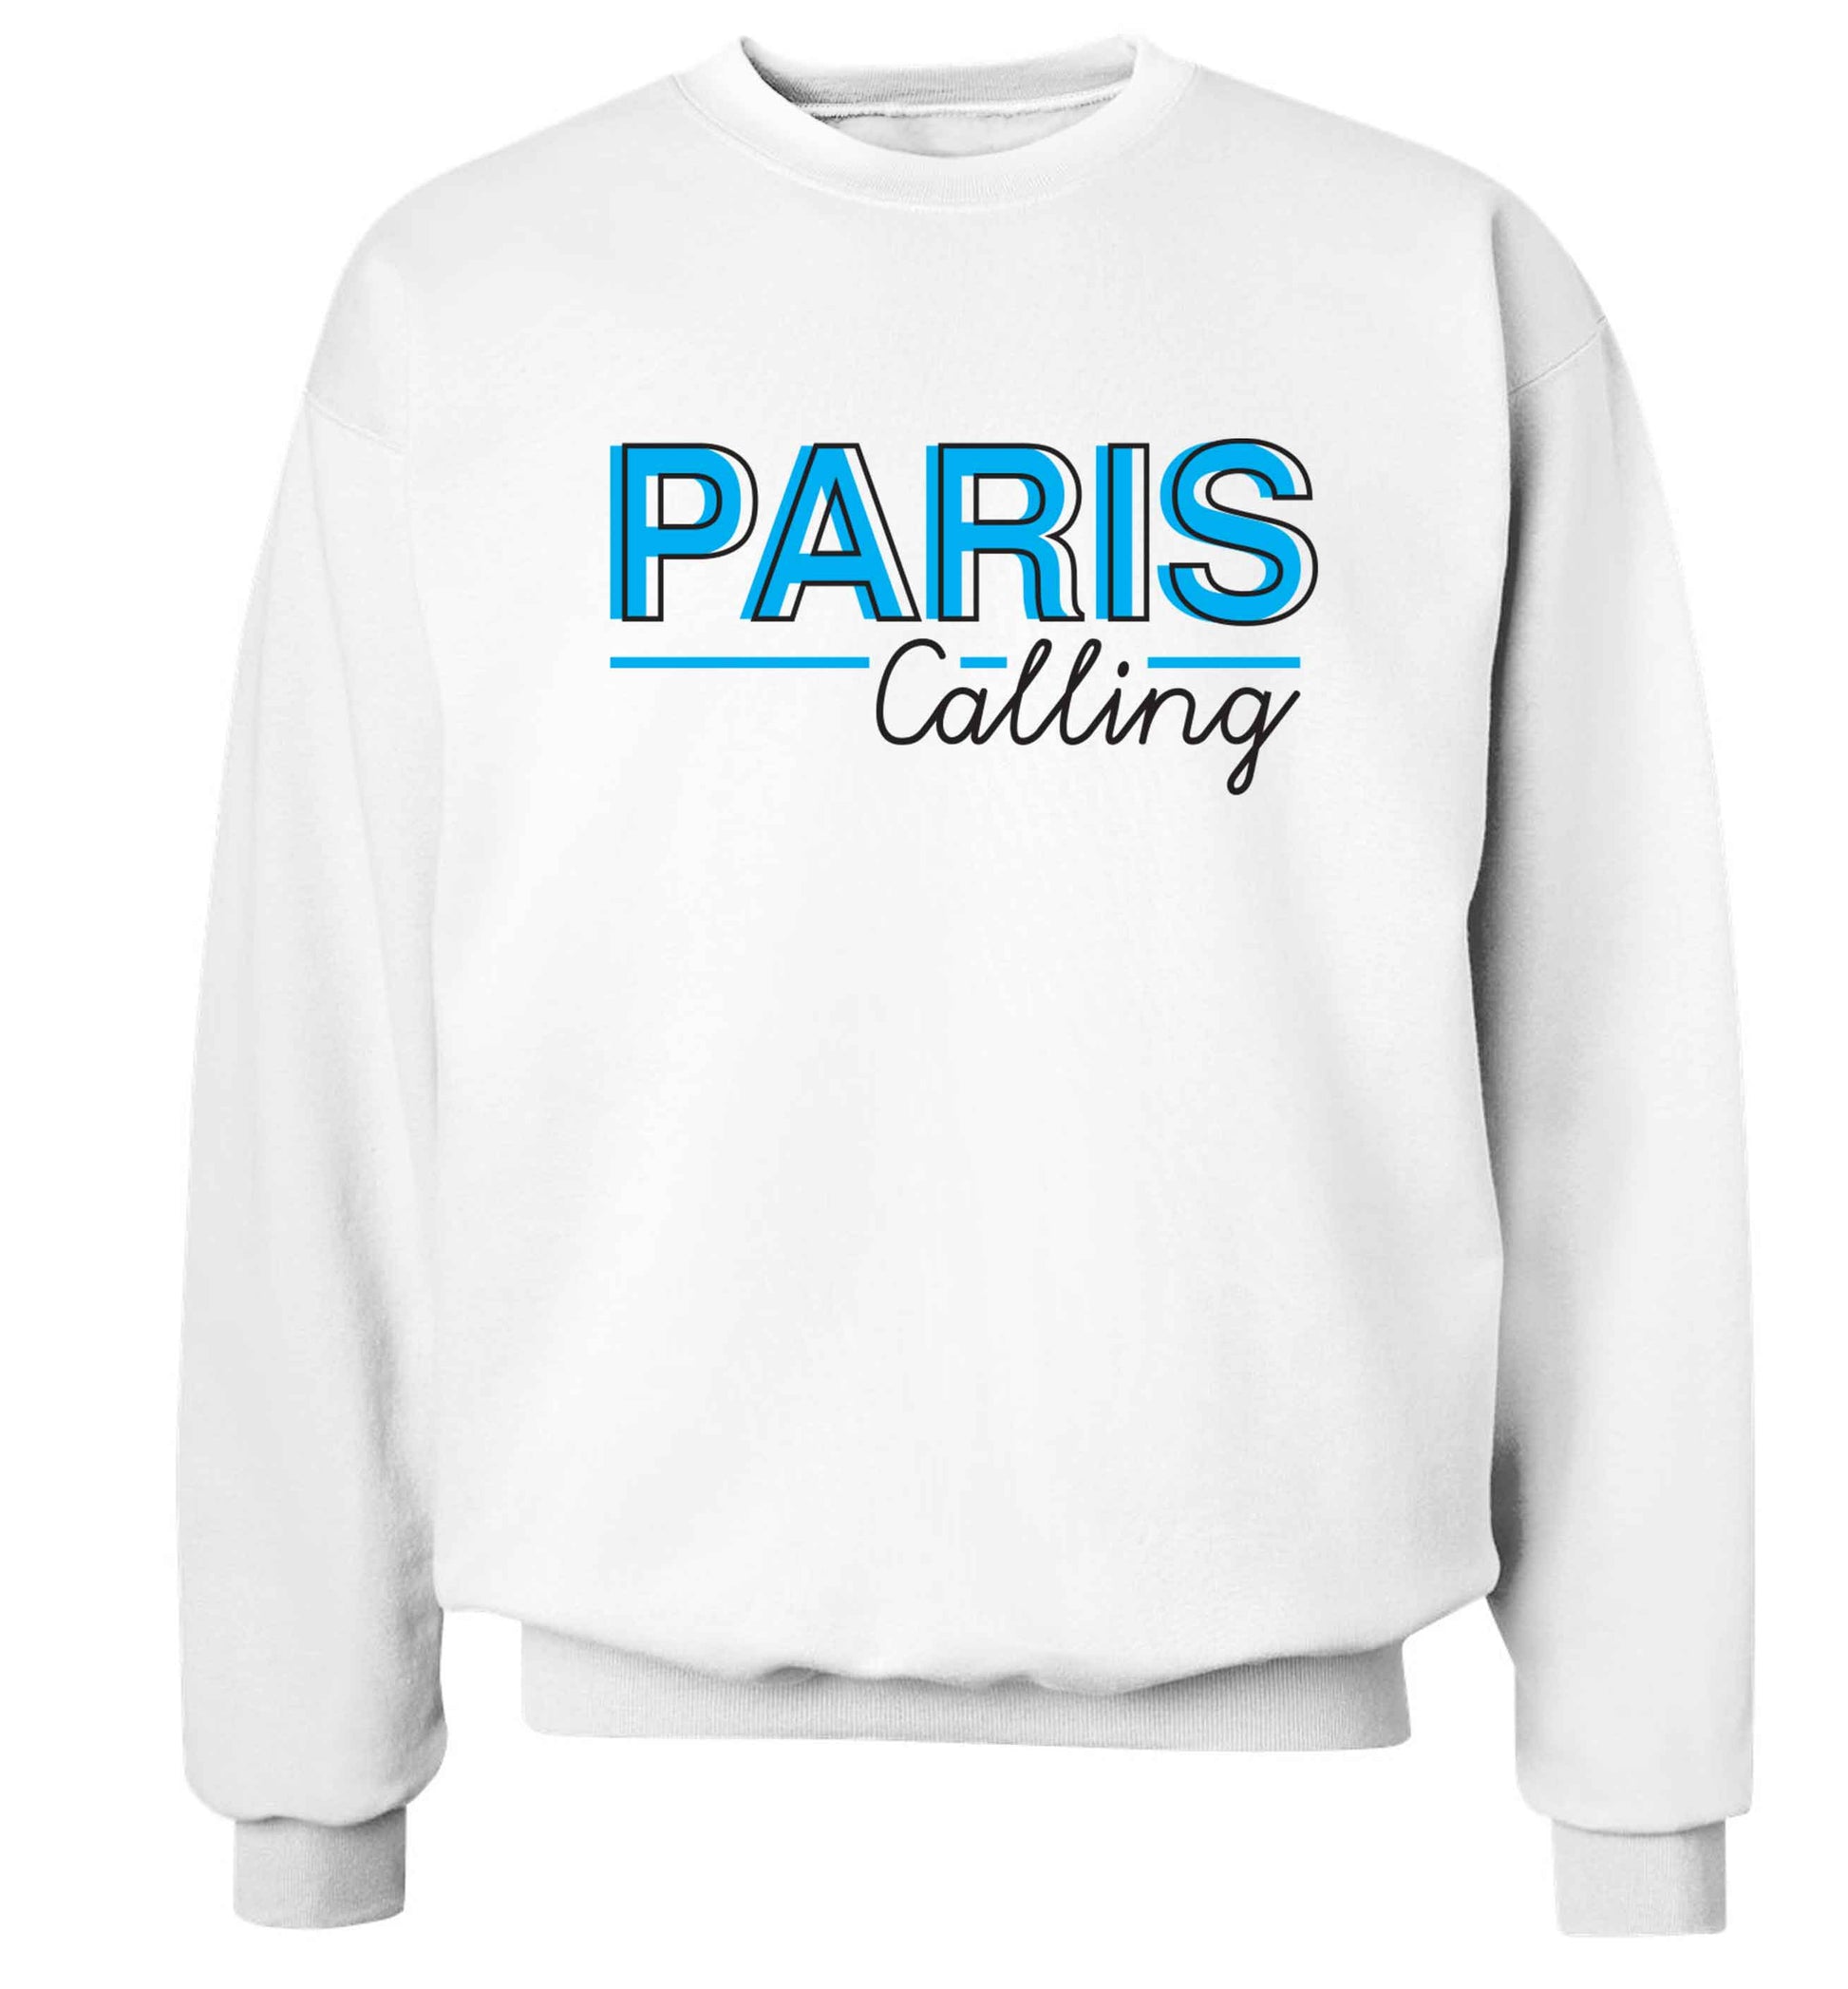 Paris calling Adult's unisex white Sweater 2XL